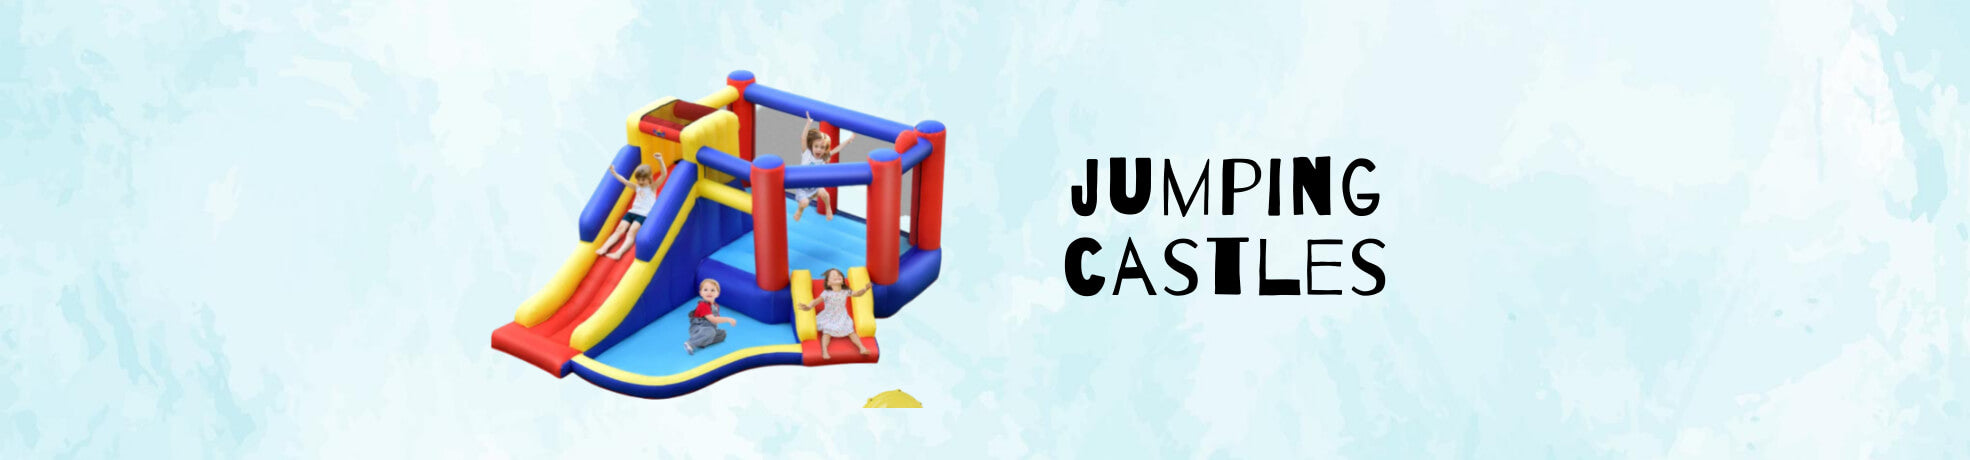 Jumping Castles at Kids Mega Mart